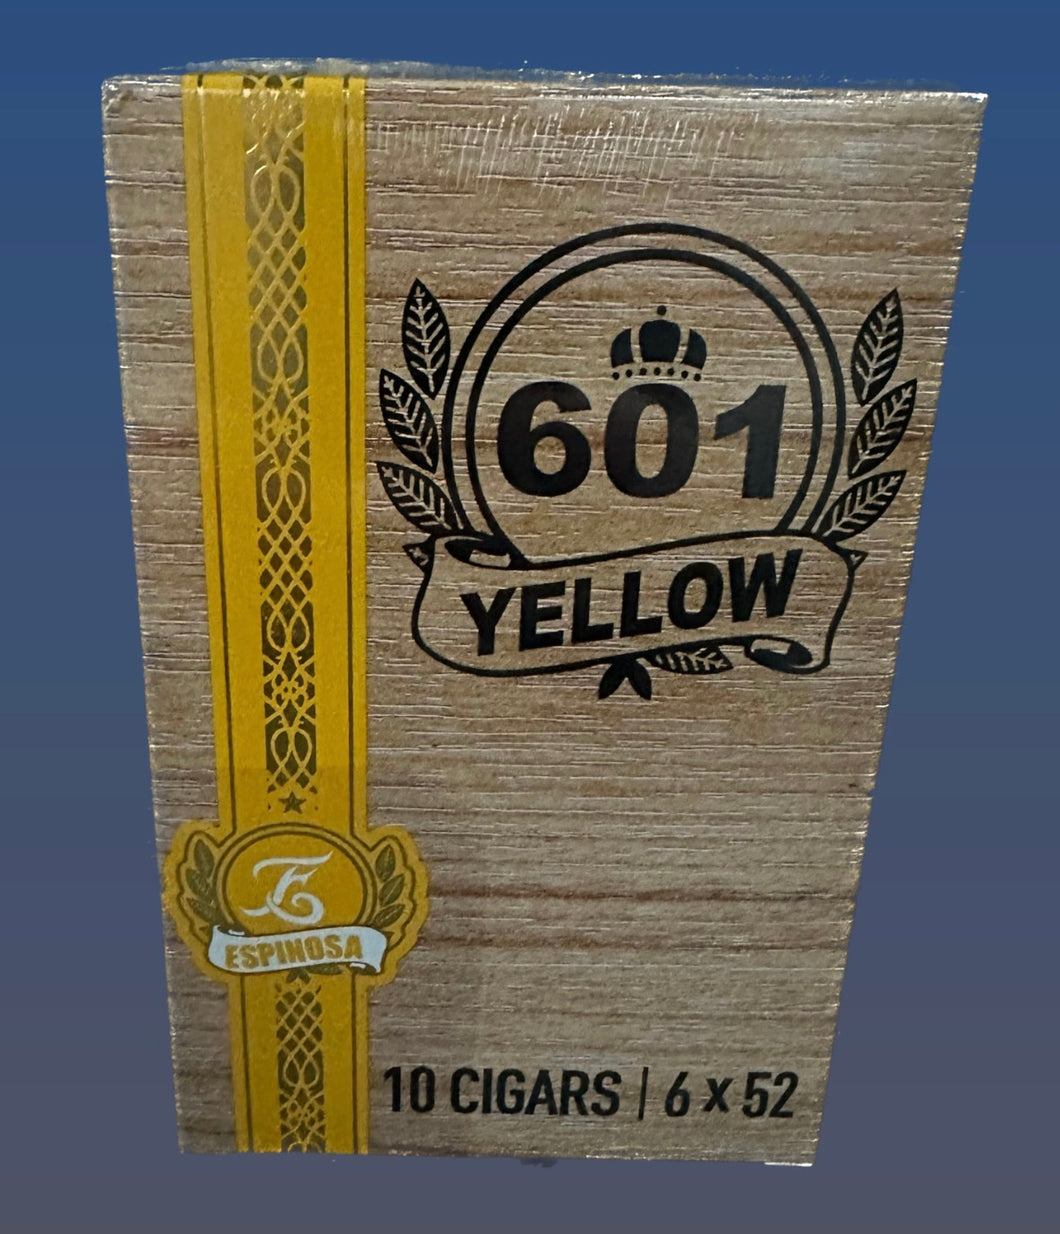 Espinosa 601 Yellow